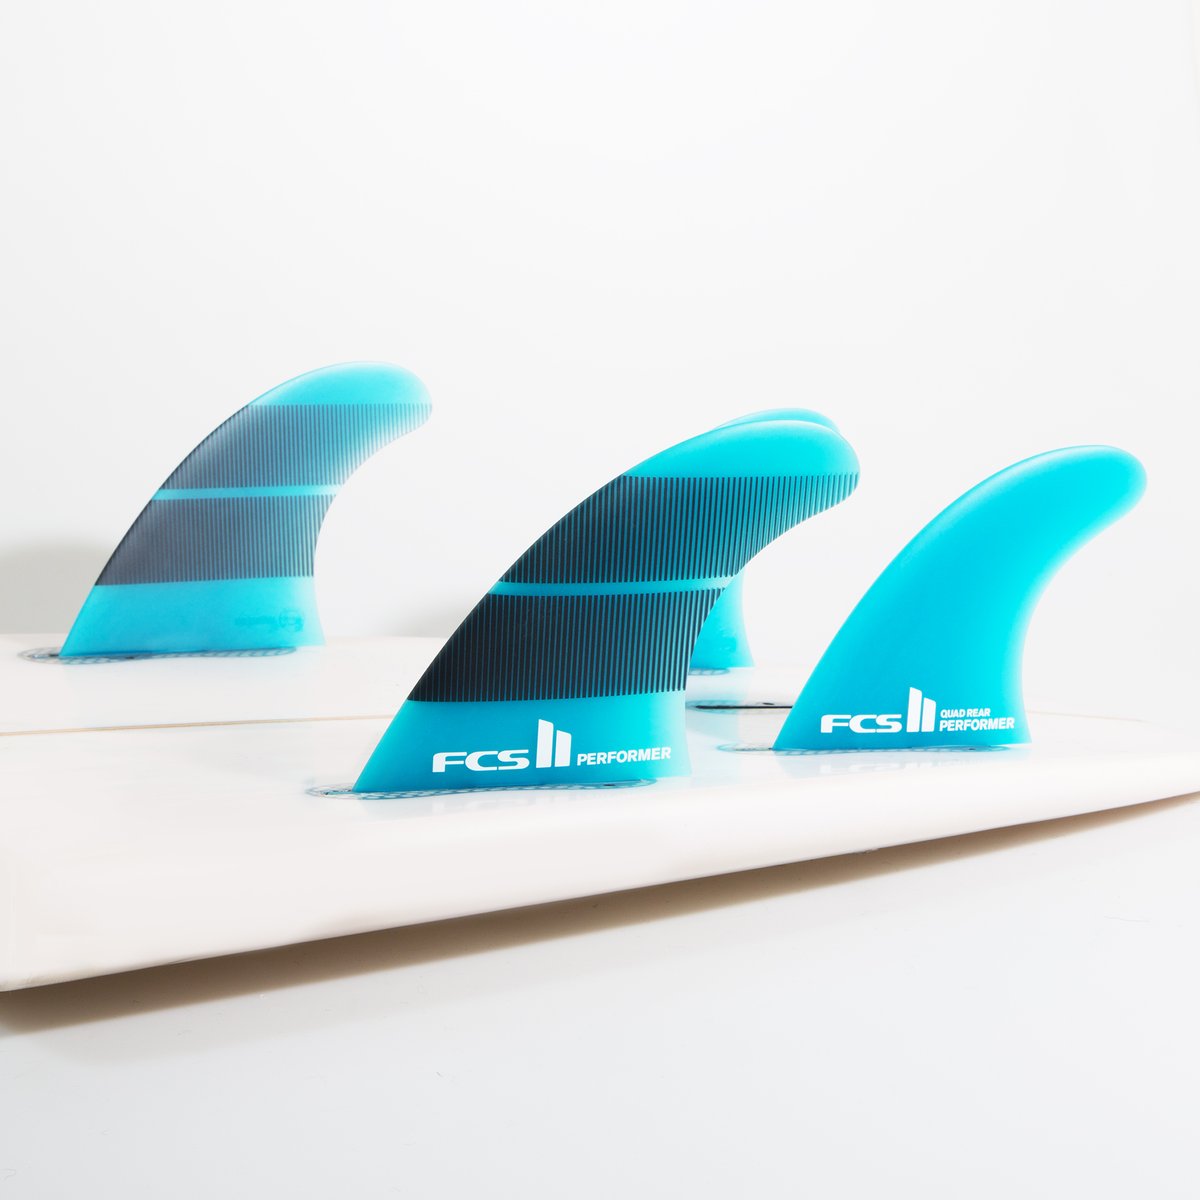 FCS II Performer Neo Glass Tri-Quad Fin Set - Medium - Urban Surf